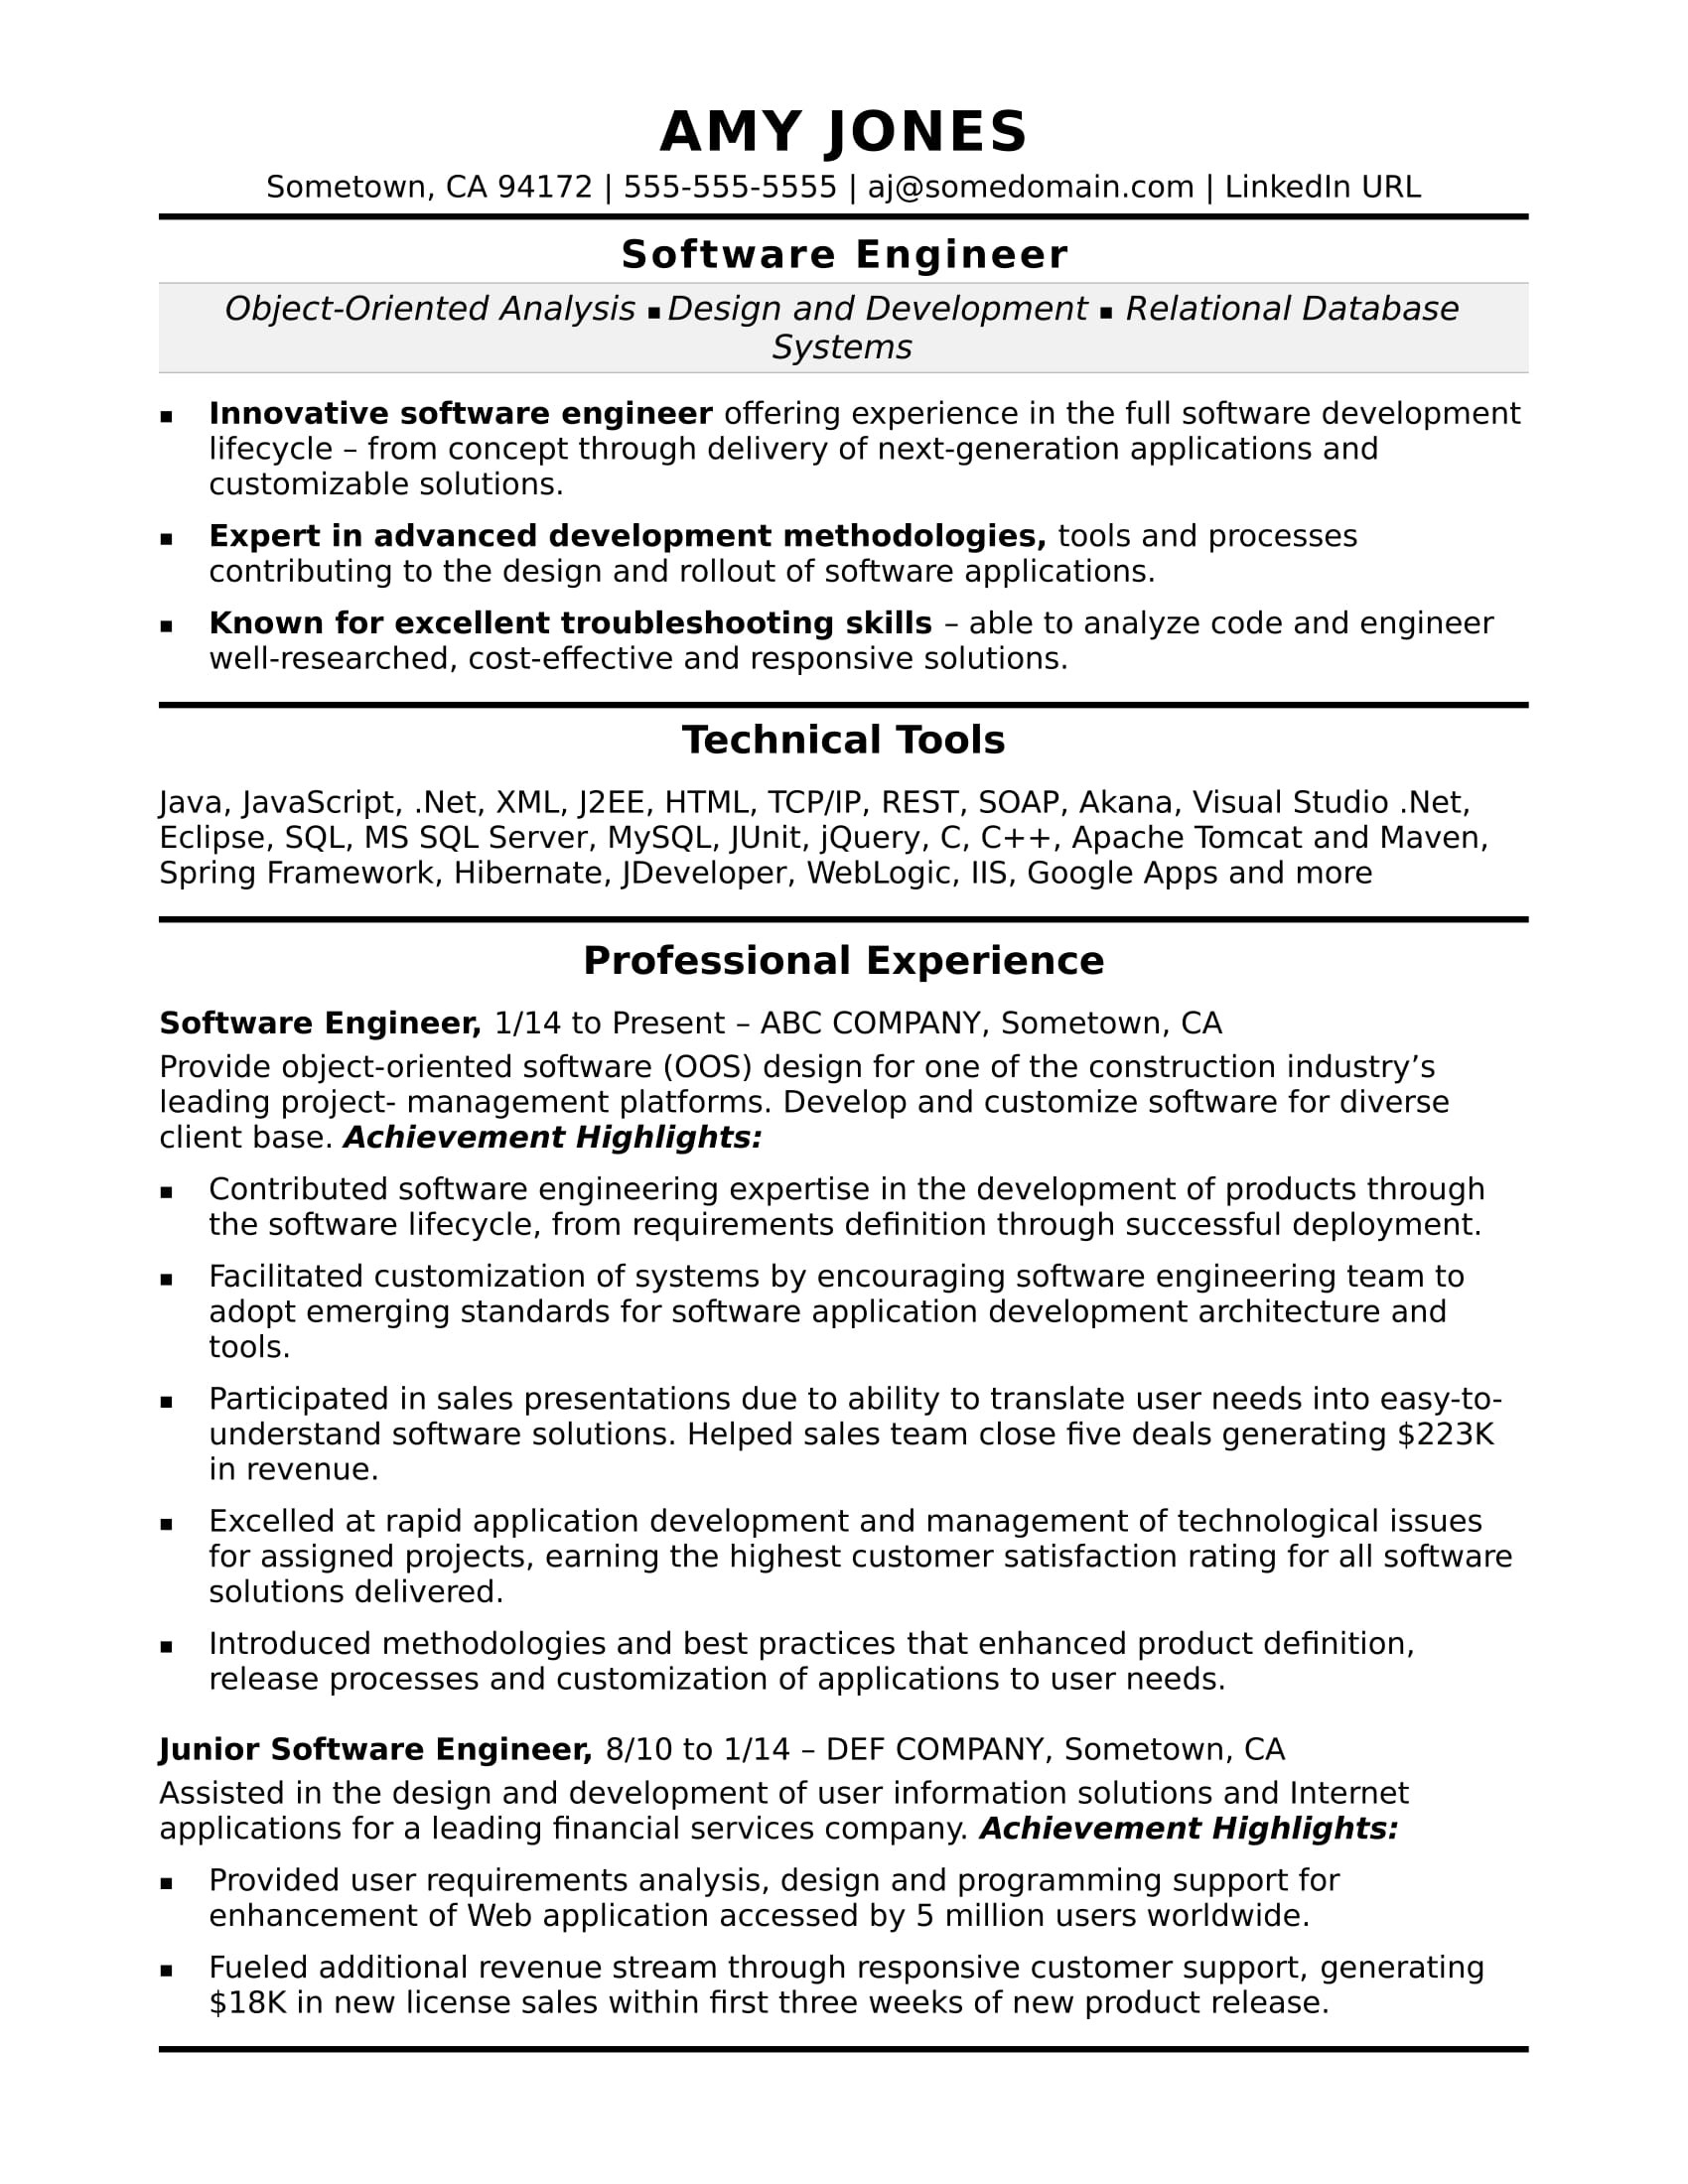 Software Engineer Junior Profesional Resume Samples software Engineer Resume Monster.com